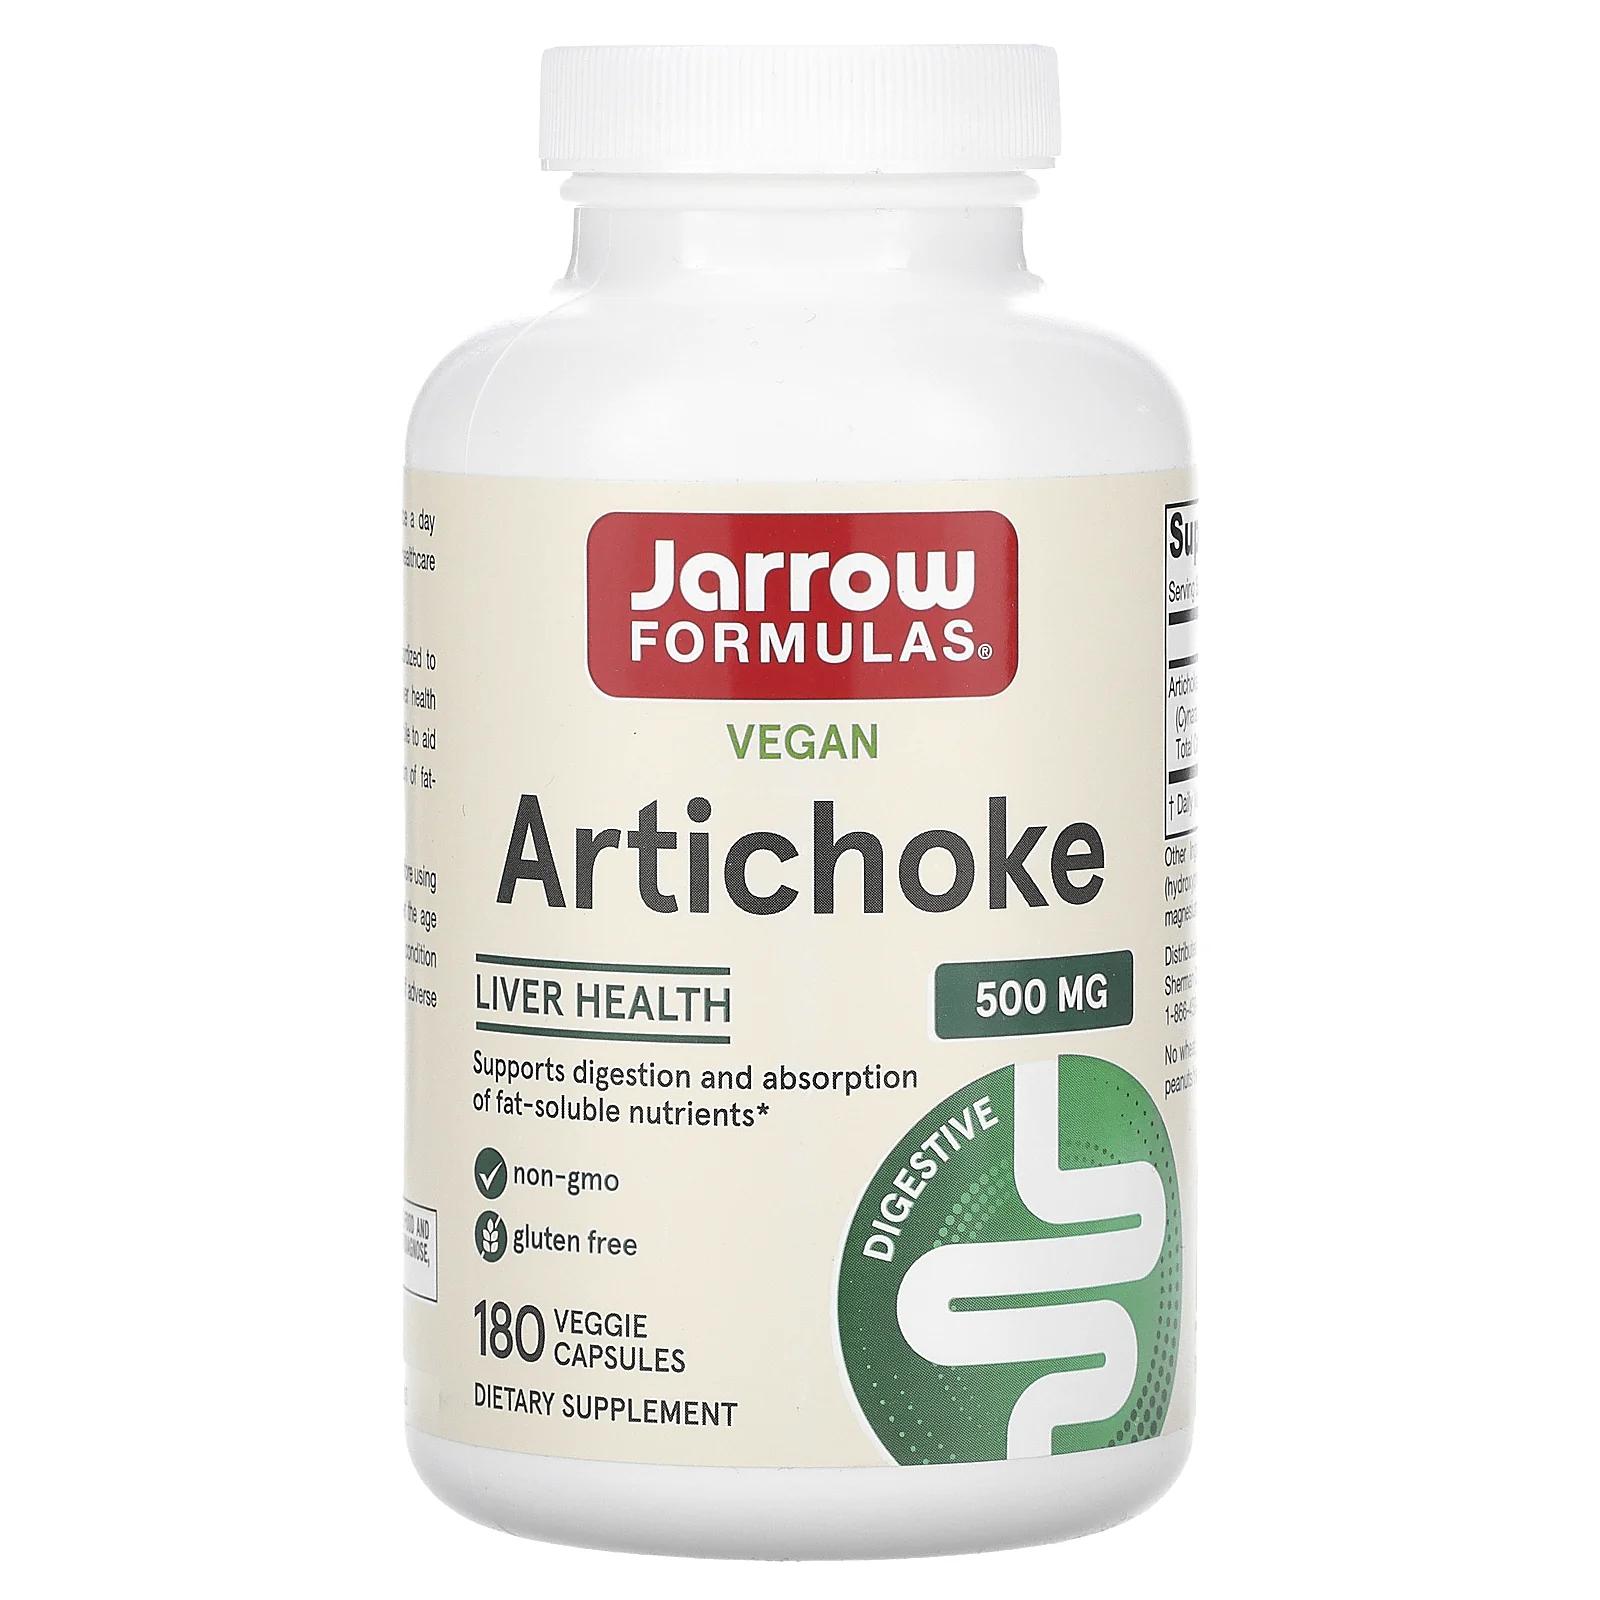 Jarrow Formulas Артишок 500 500 мг 180 капсул jarrow formulas артишок 180 вегетарианских капсул